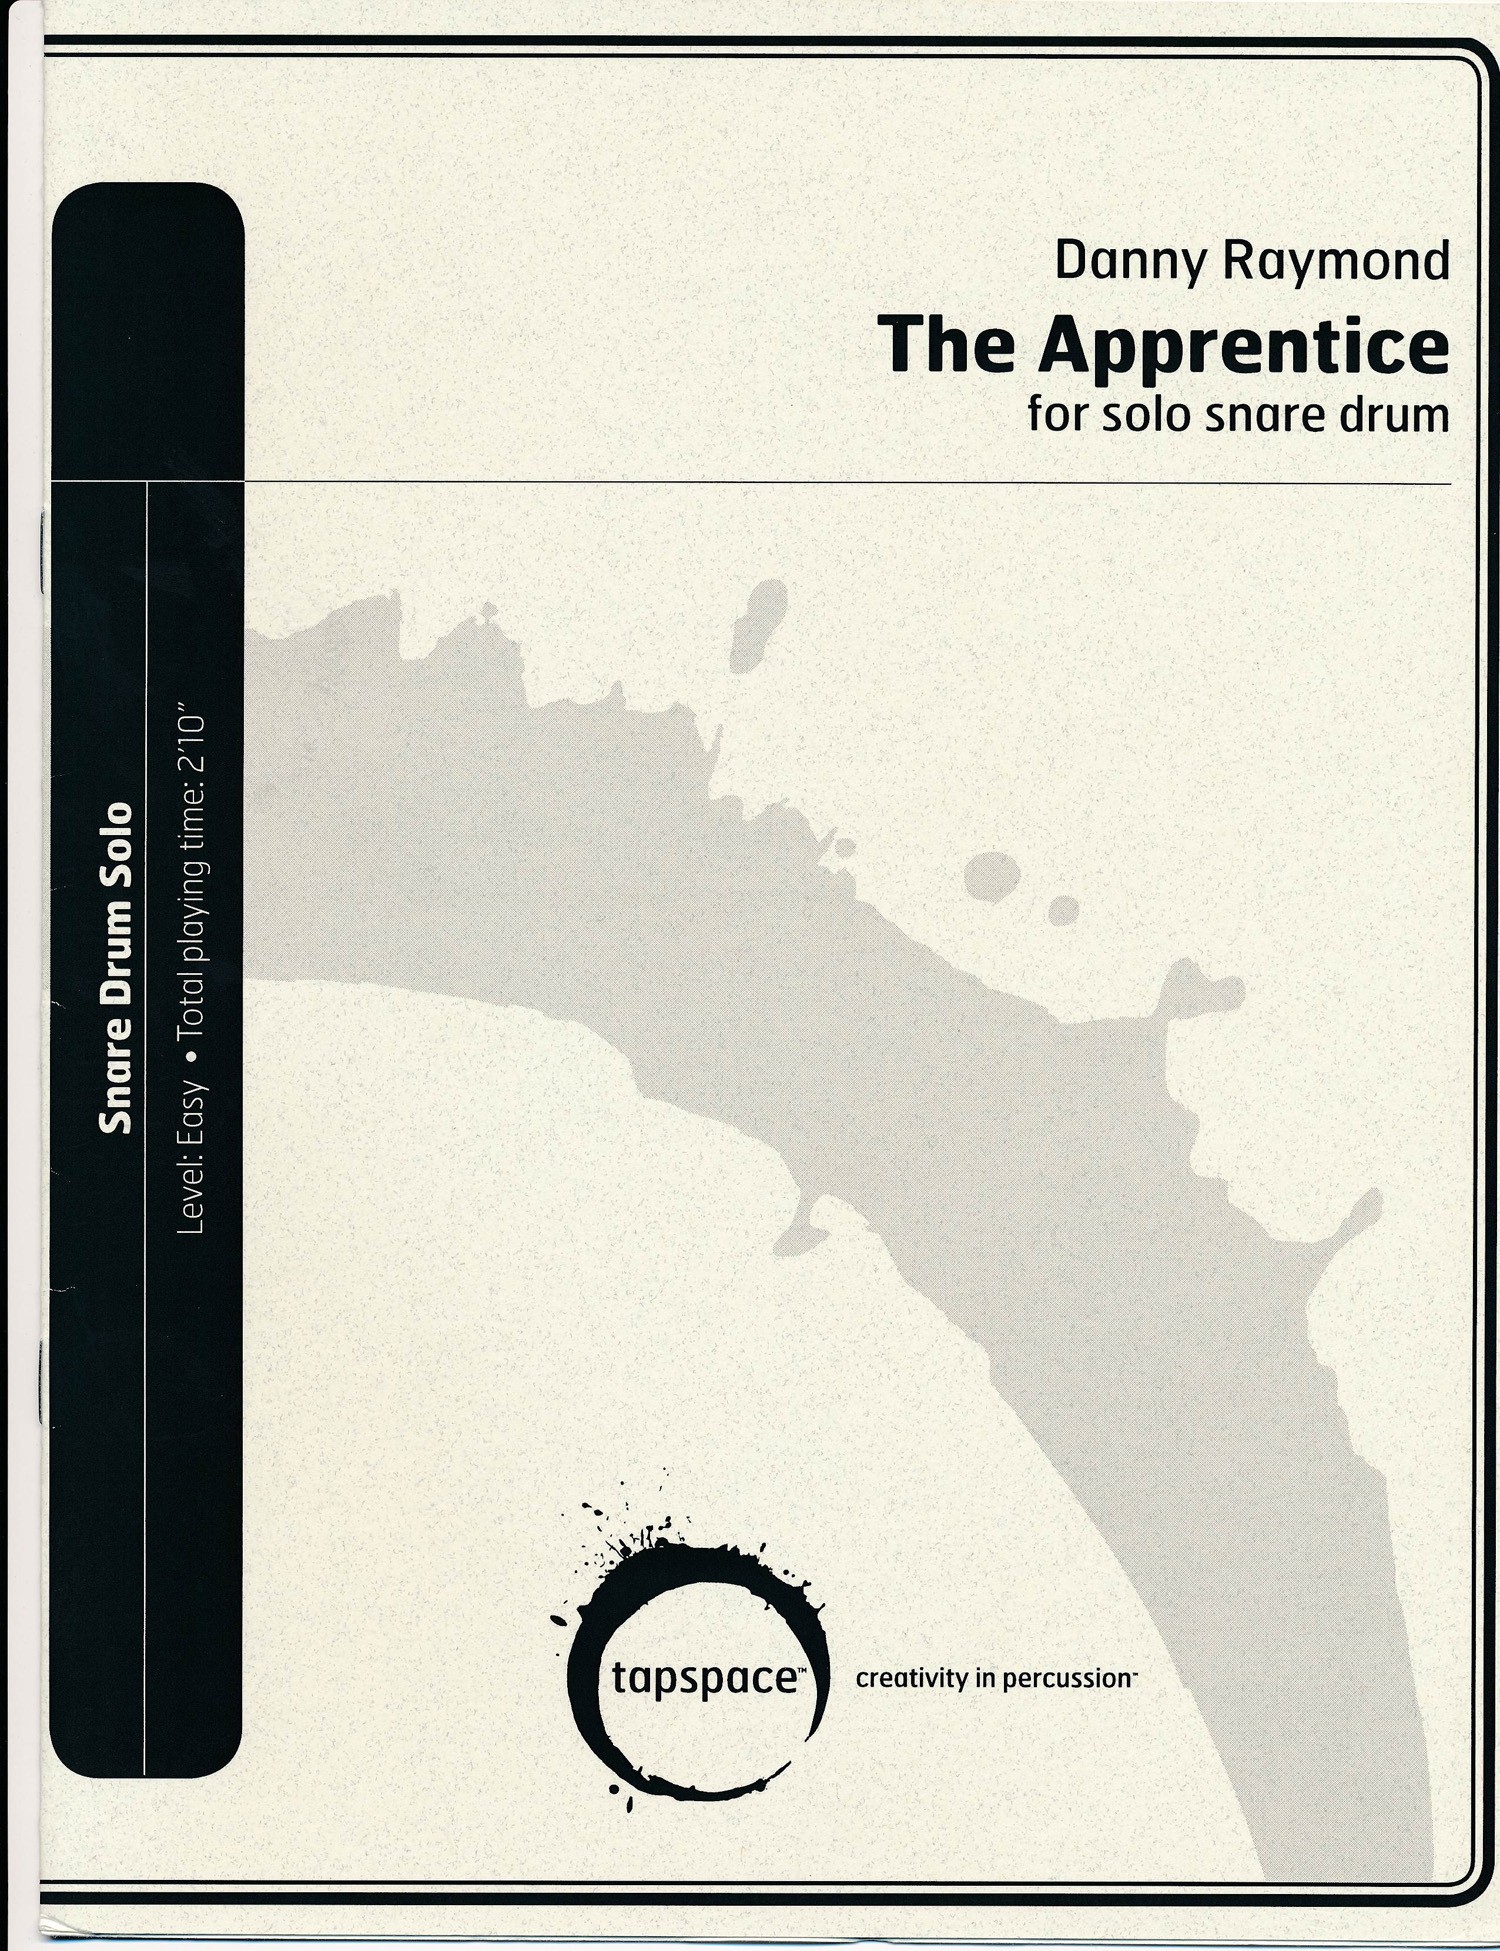 The Apprentice by Danny Raymond